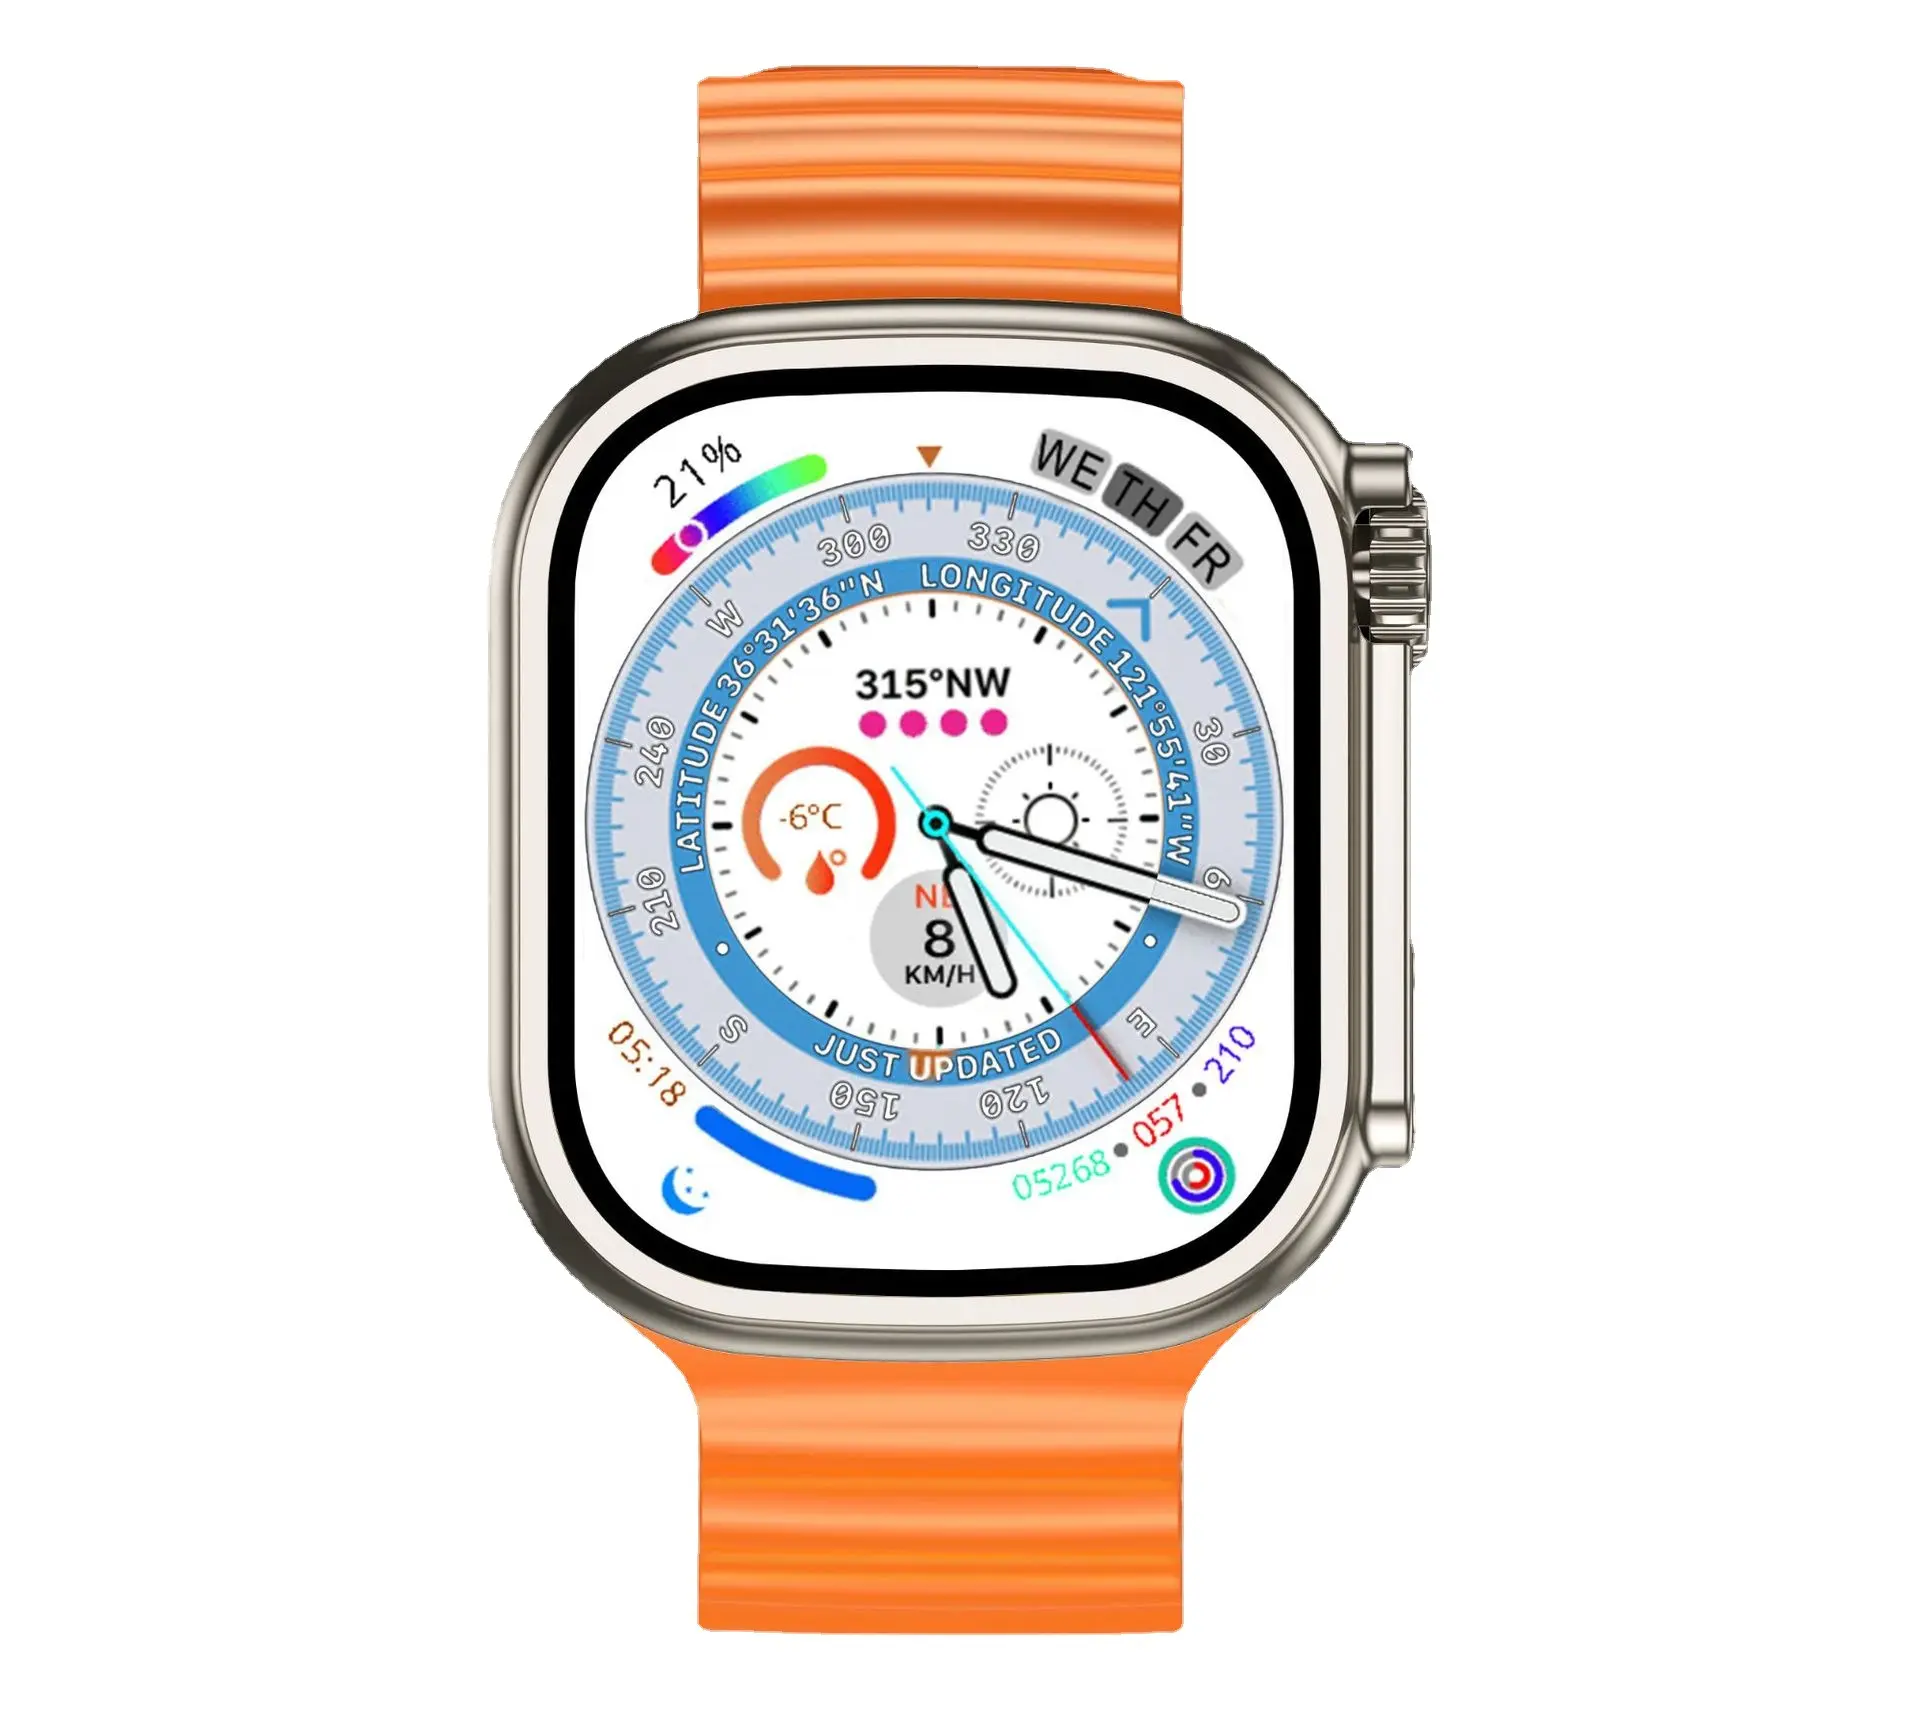 5G networks S8 telephone watch SIM card watch Intelligent D10 1.99 inch 820mah smartwatch watch 8 ultra